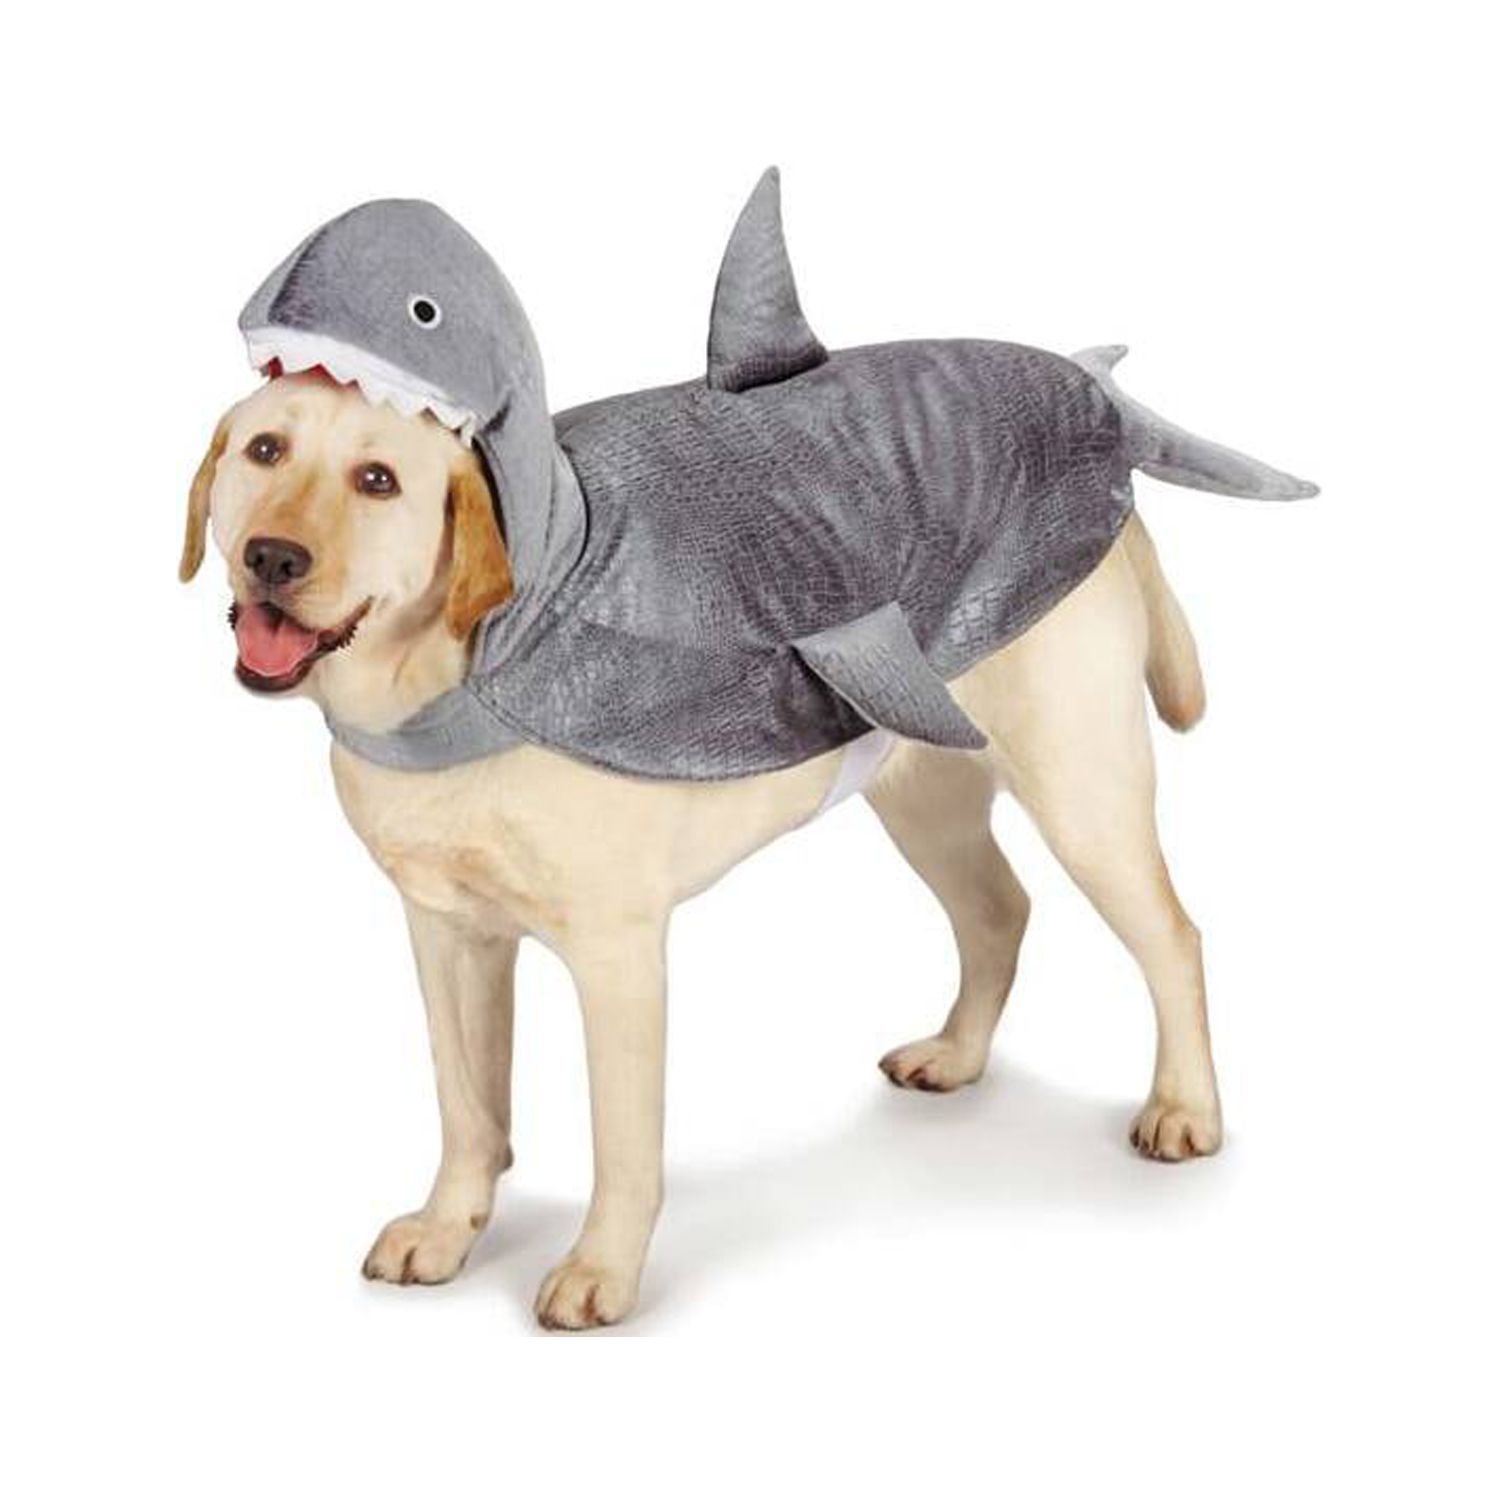 Casual Canine Shark Halloween Dog Costume - Small - image 1 of 4